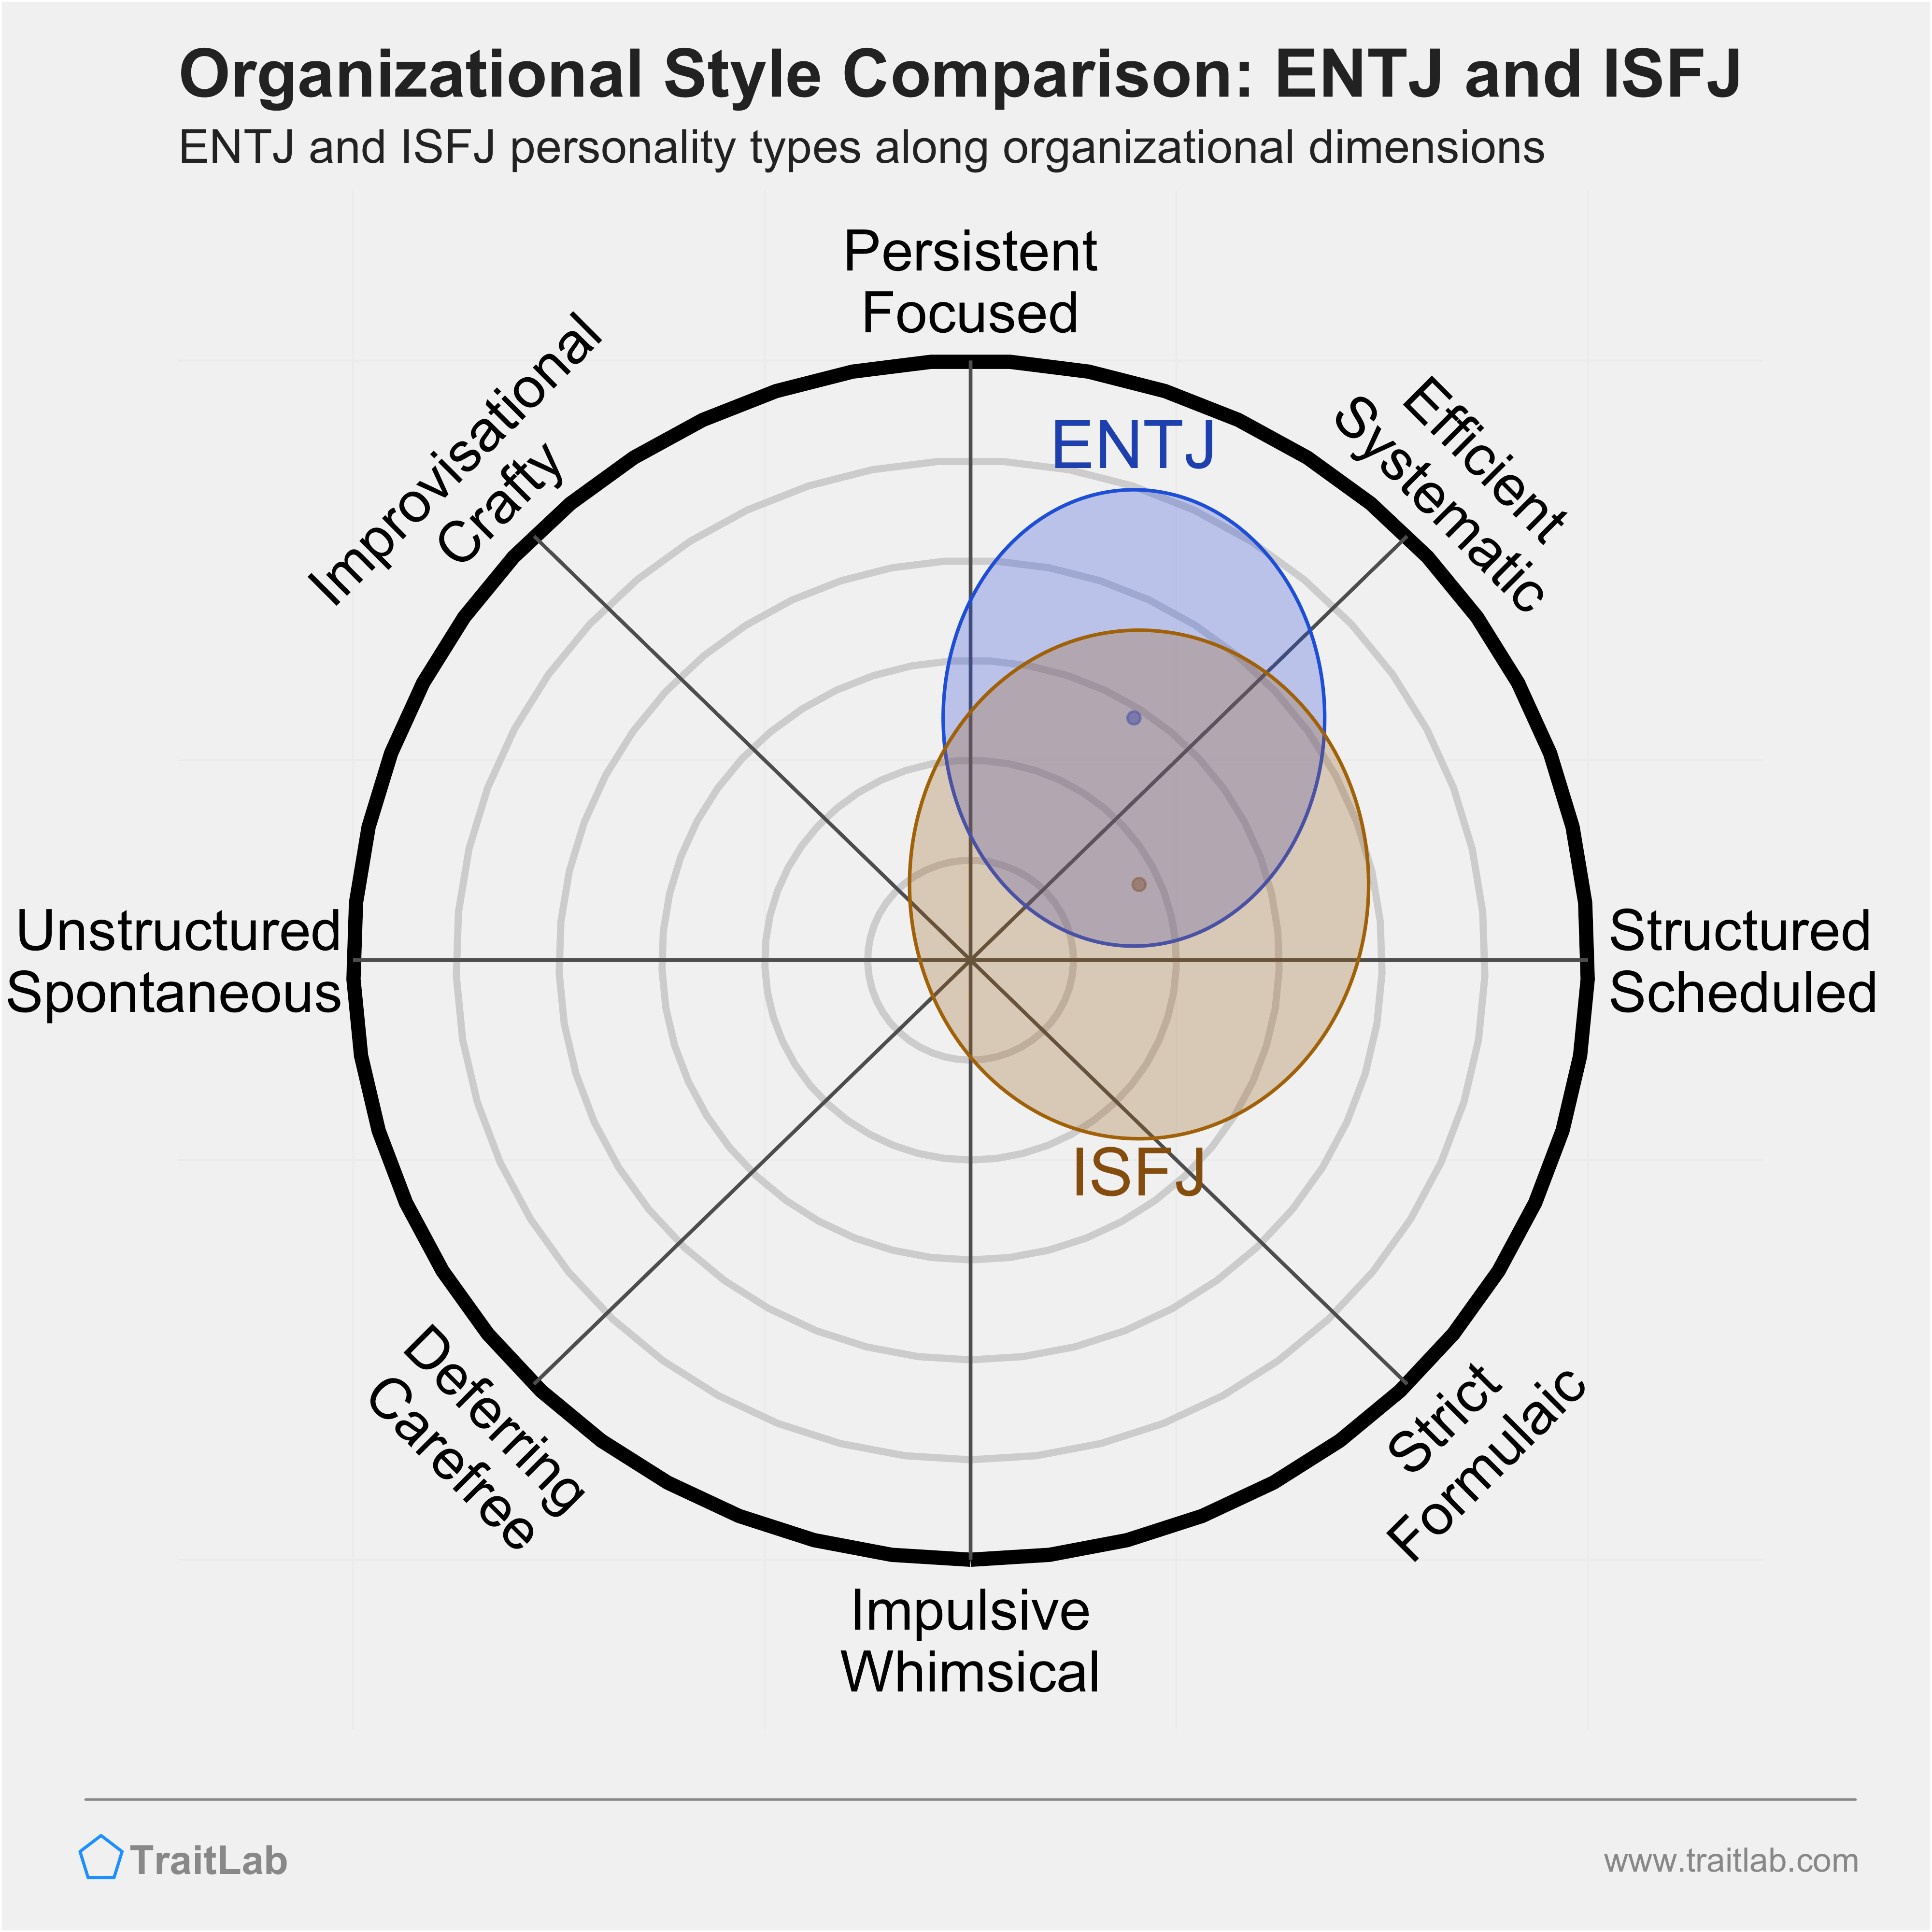 ENTJ and ISFJ comparison across organizational dimensions